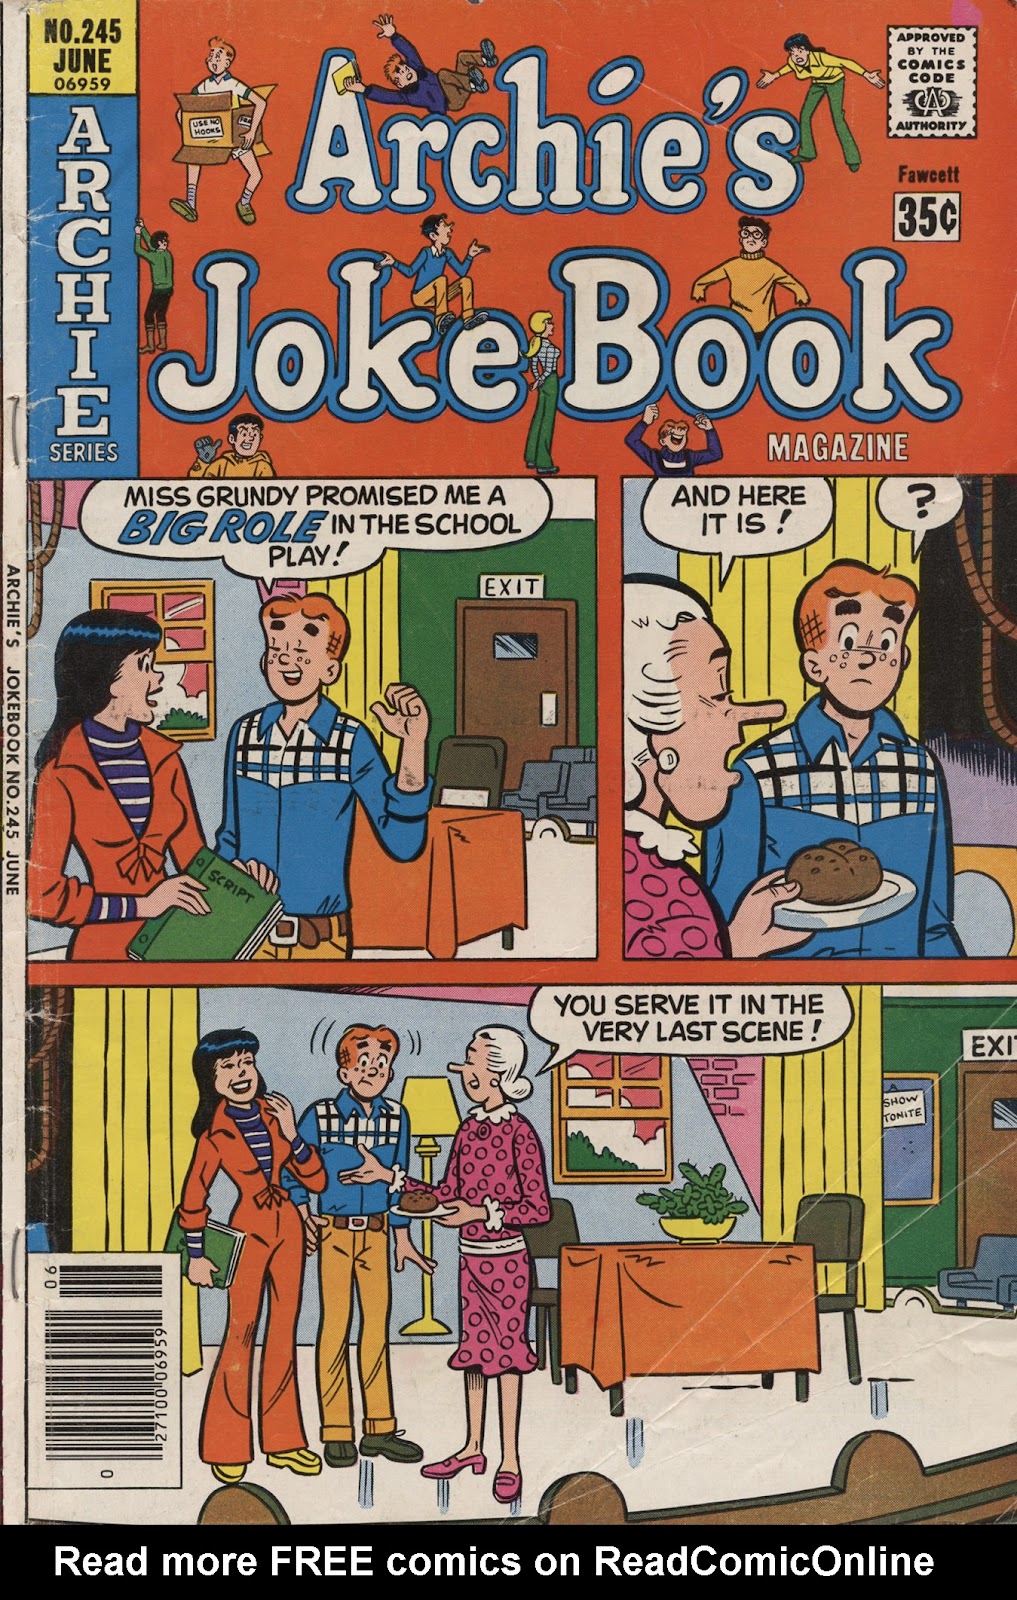 Archie's Joke Book Magazine issue 245 - Page 1